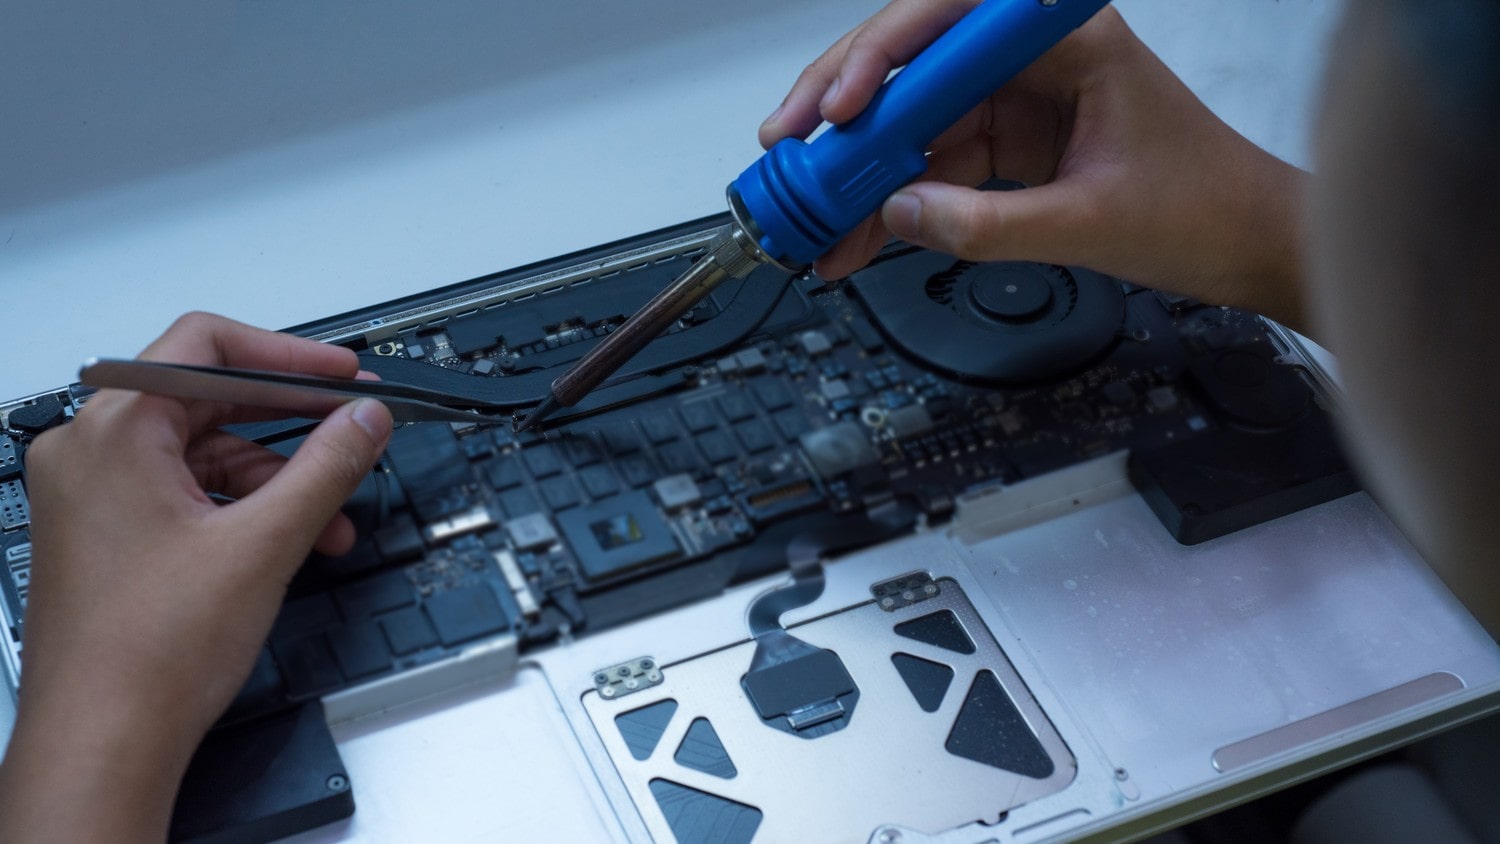 A close-up of a person repairing a broken laptop.